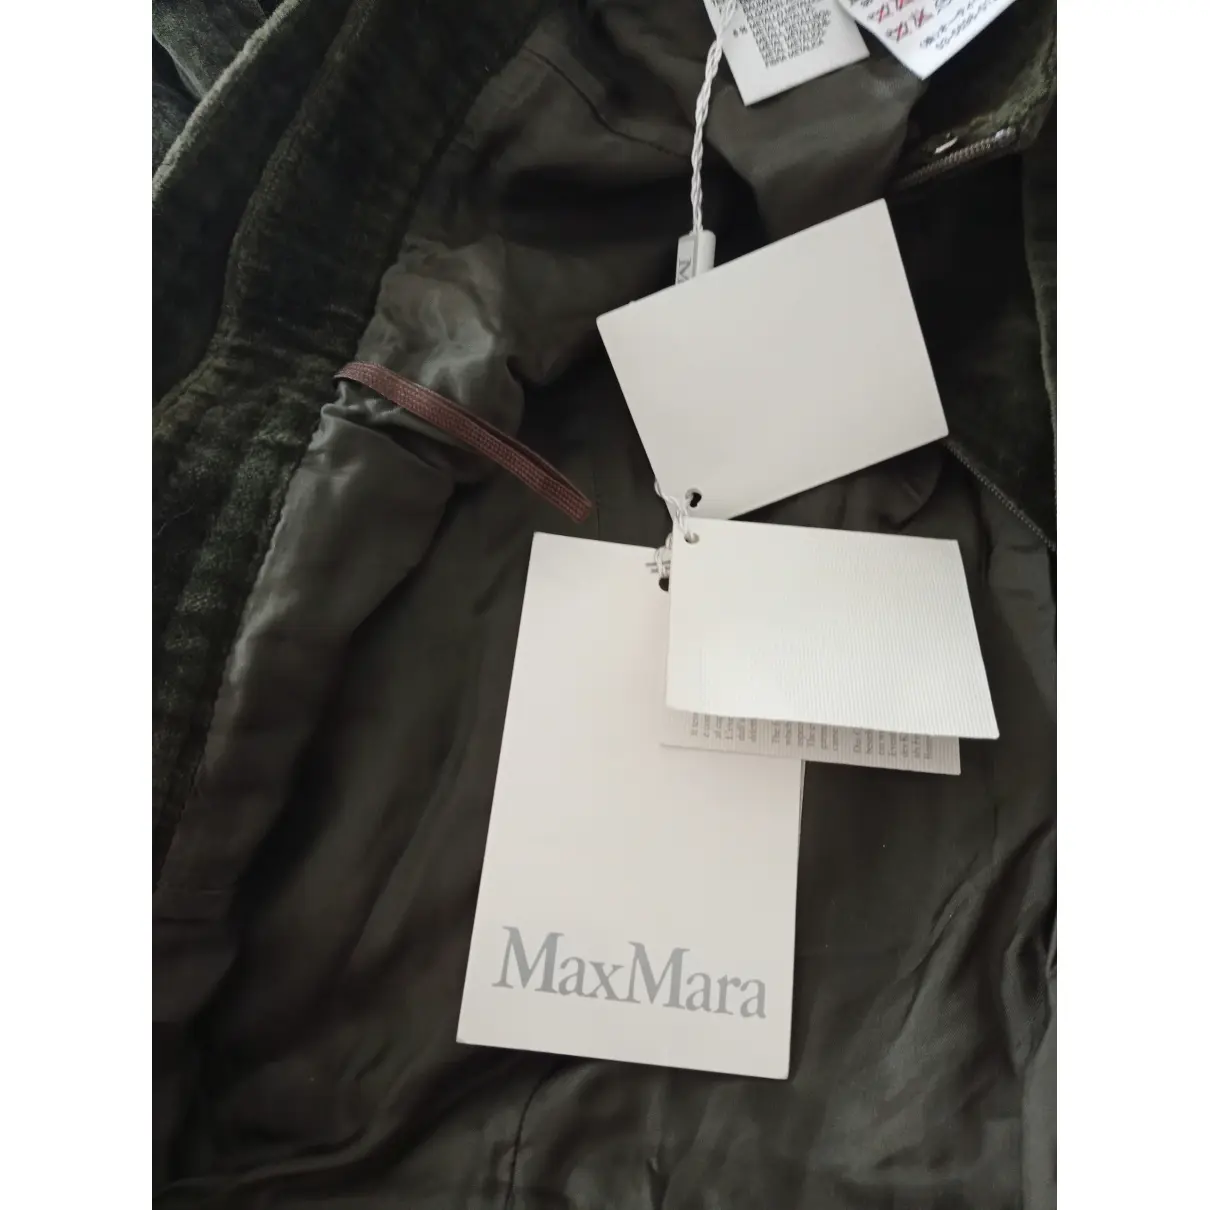 Maxi skirt Max Mara